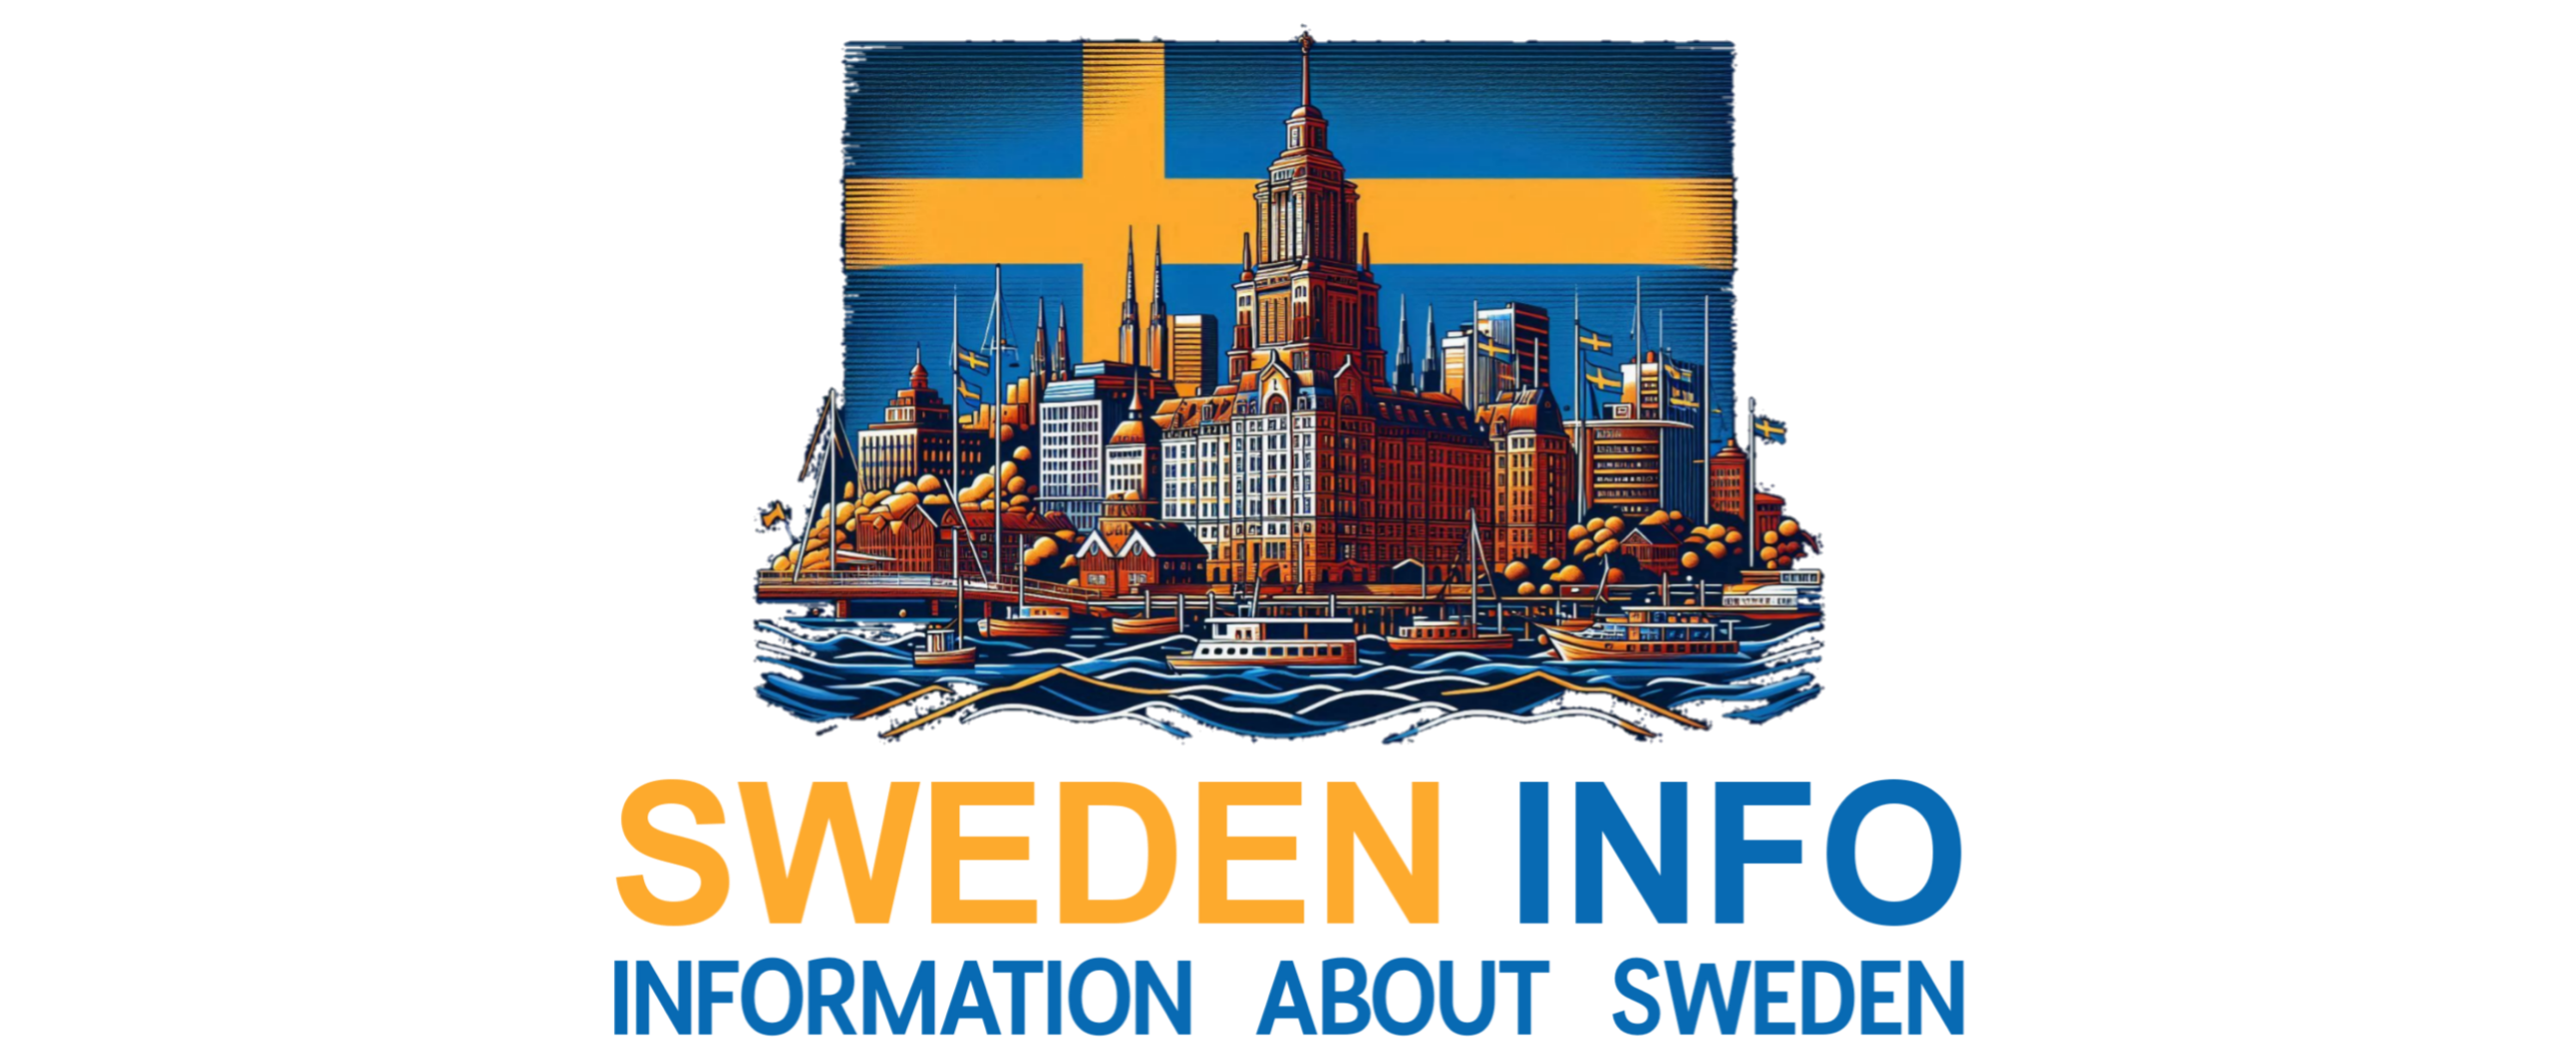 SWEDEN INFO